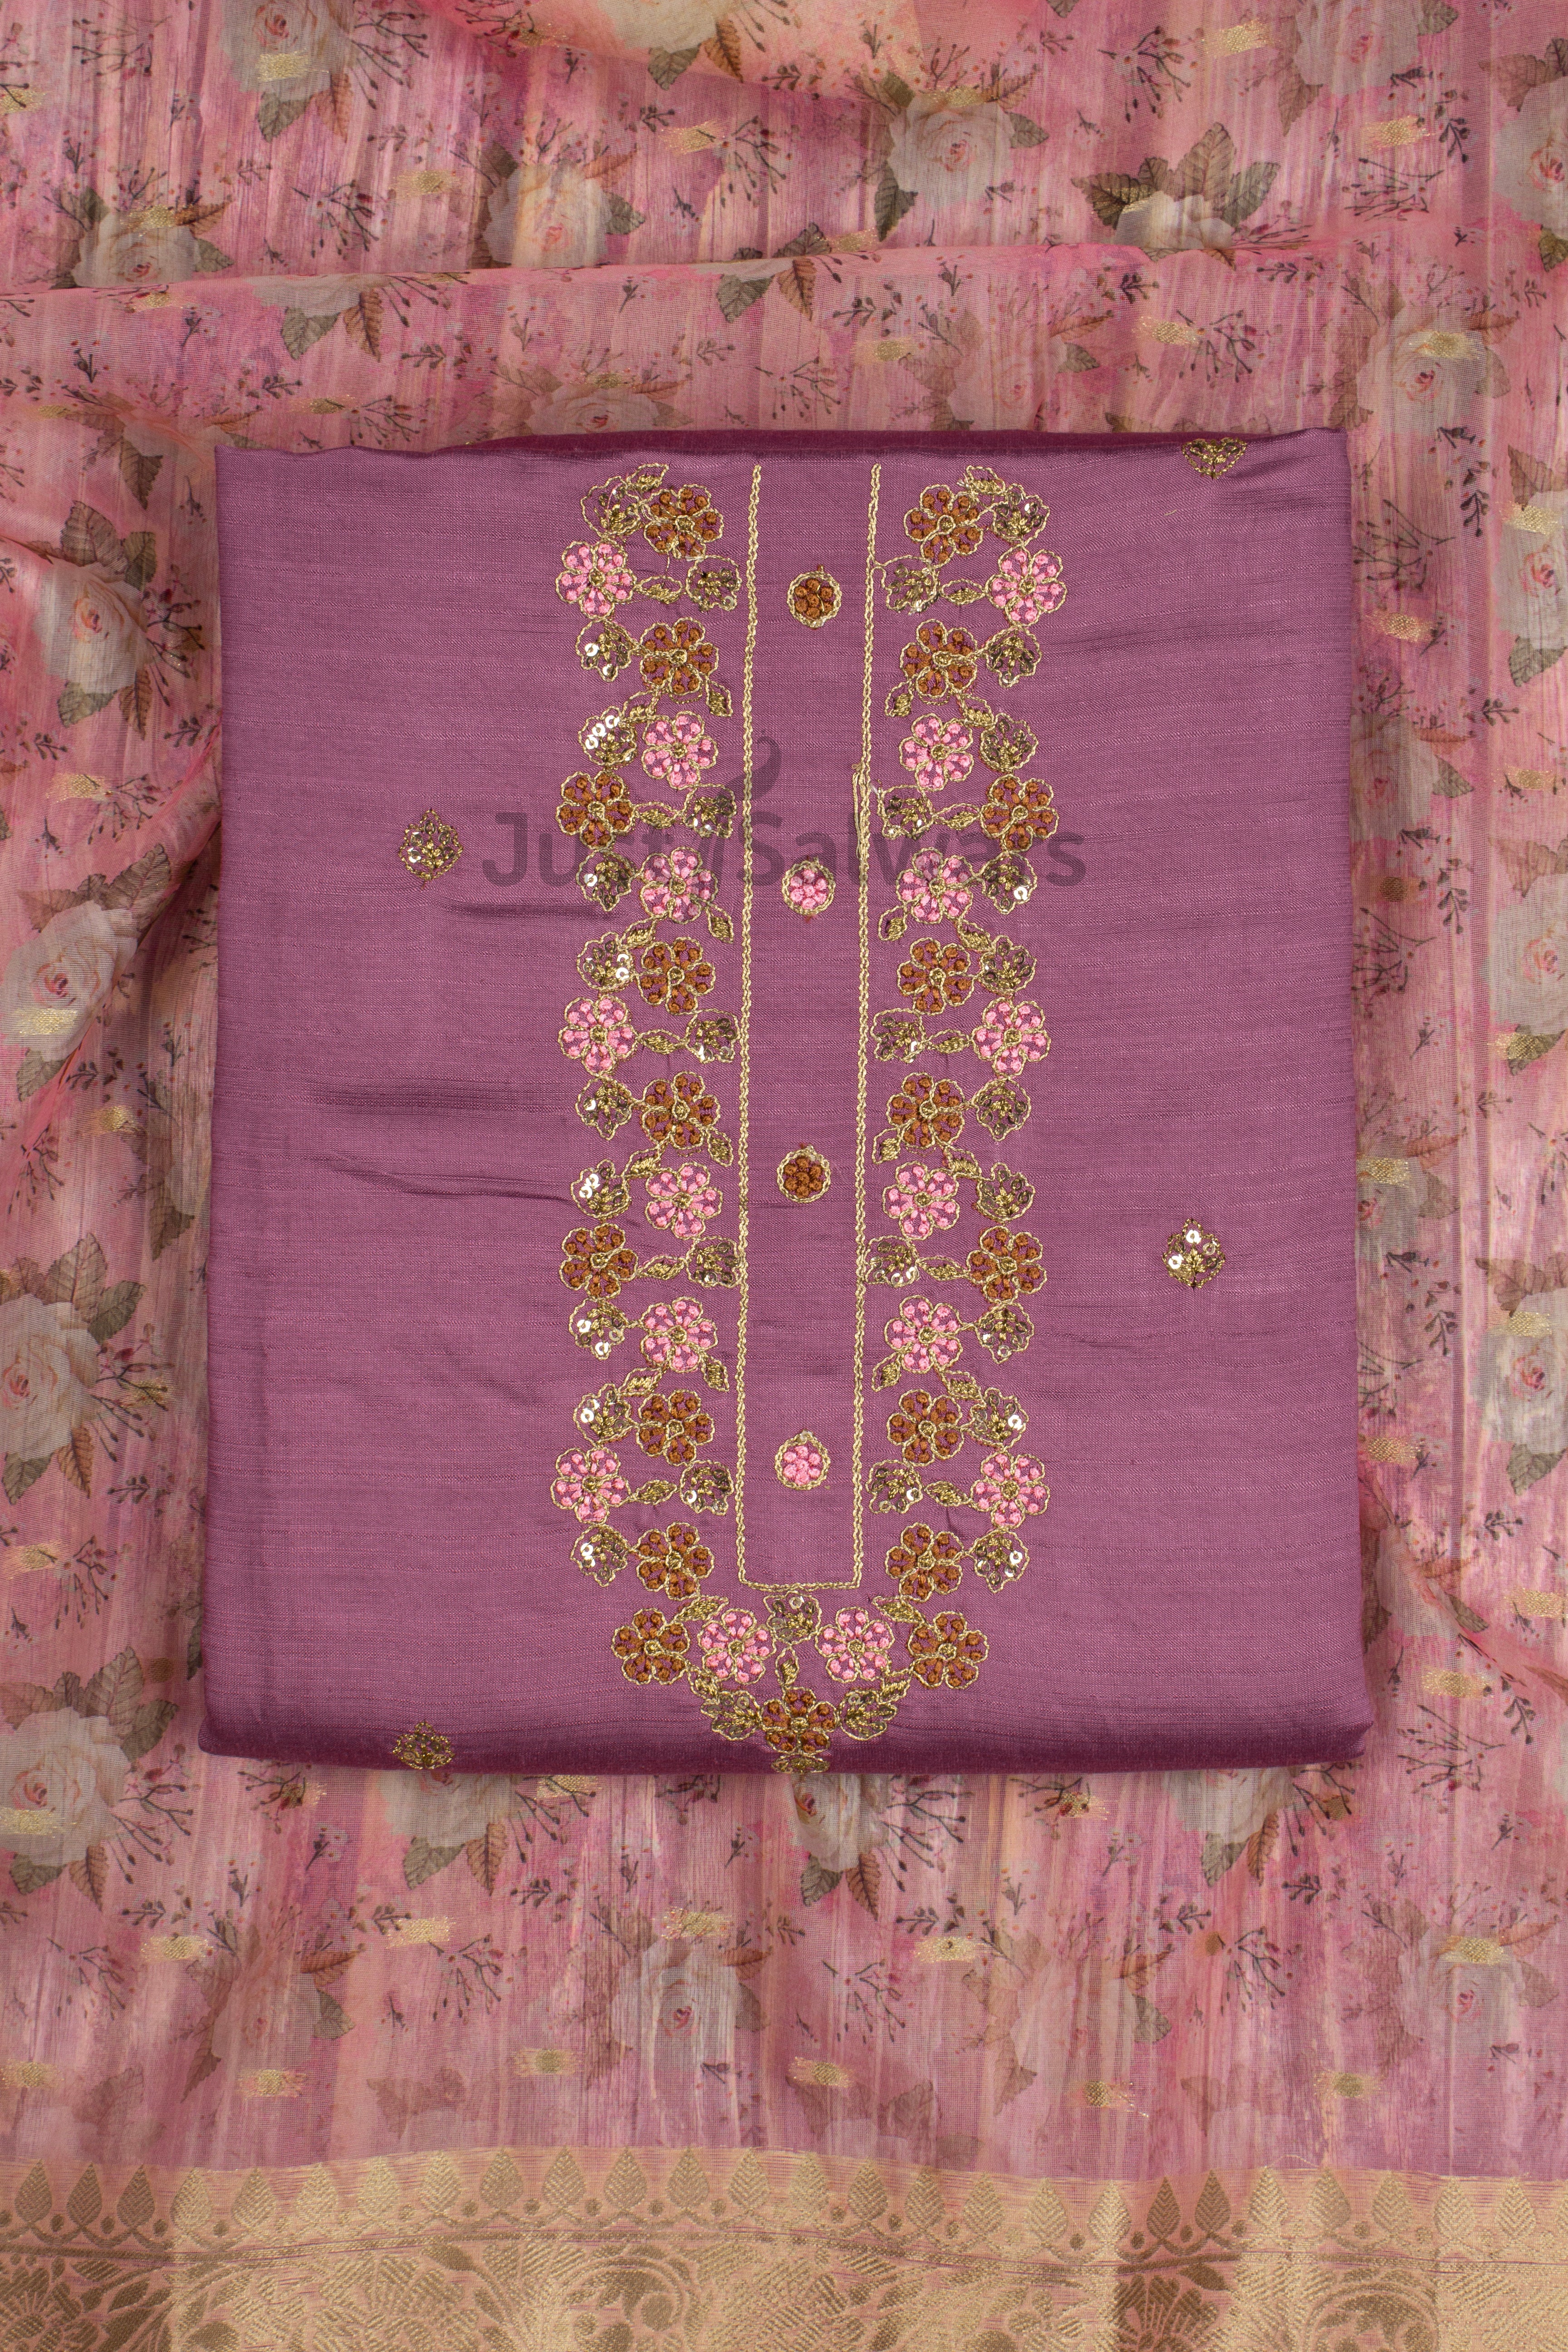 Buy Purple colour, cotton salwar kameez dupatta dress materials,  unstitched,embroidery,Bottom white colour cotton,Dupatta chiffon printed.  at Amazon.in